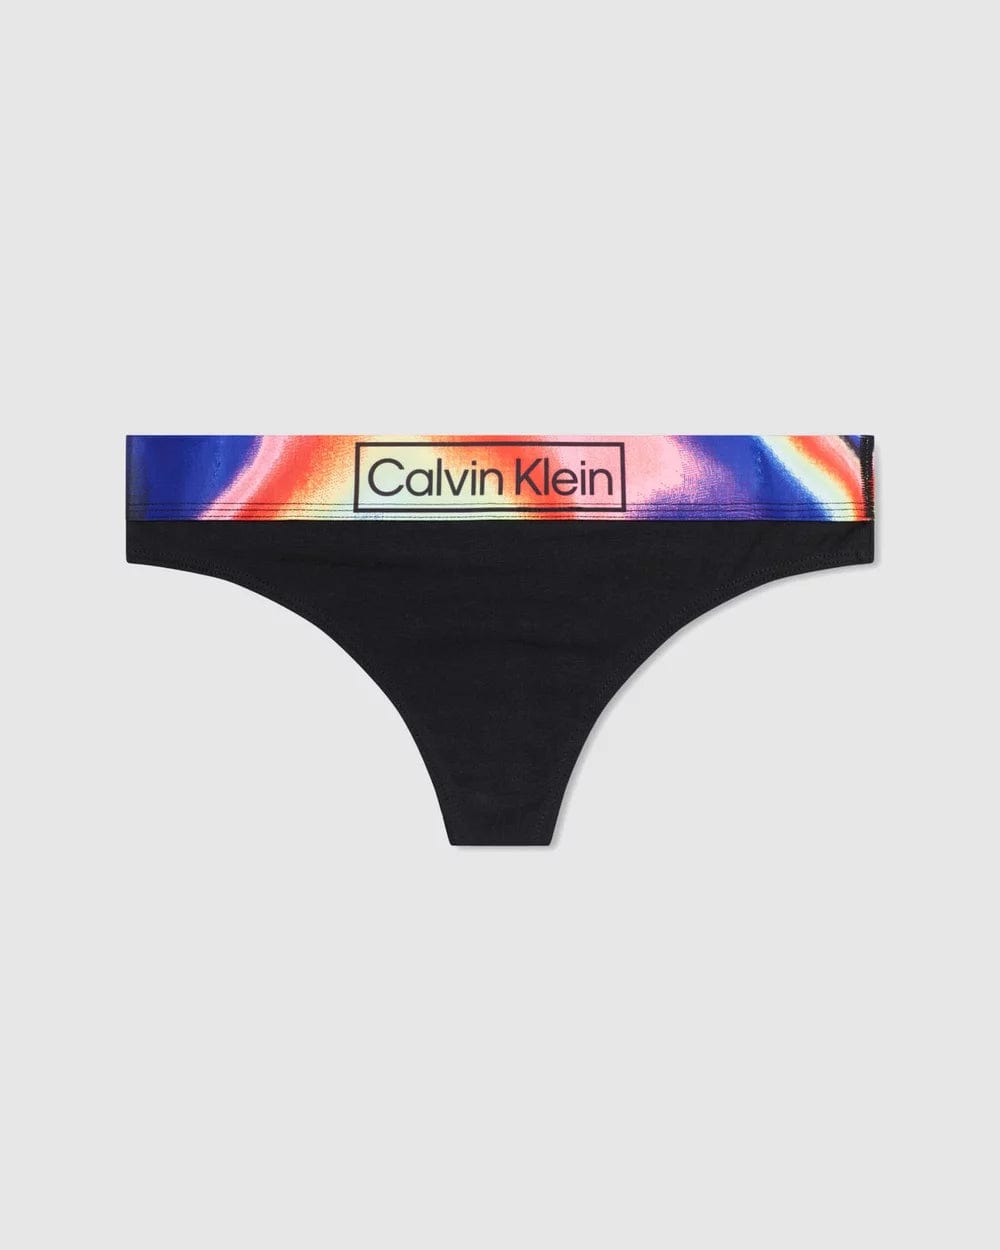 Pride Thong - Black - Calvin Klein - Splash Swimwear  - calvin klein, lingerie, Mar22 - Splash Swimwear 